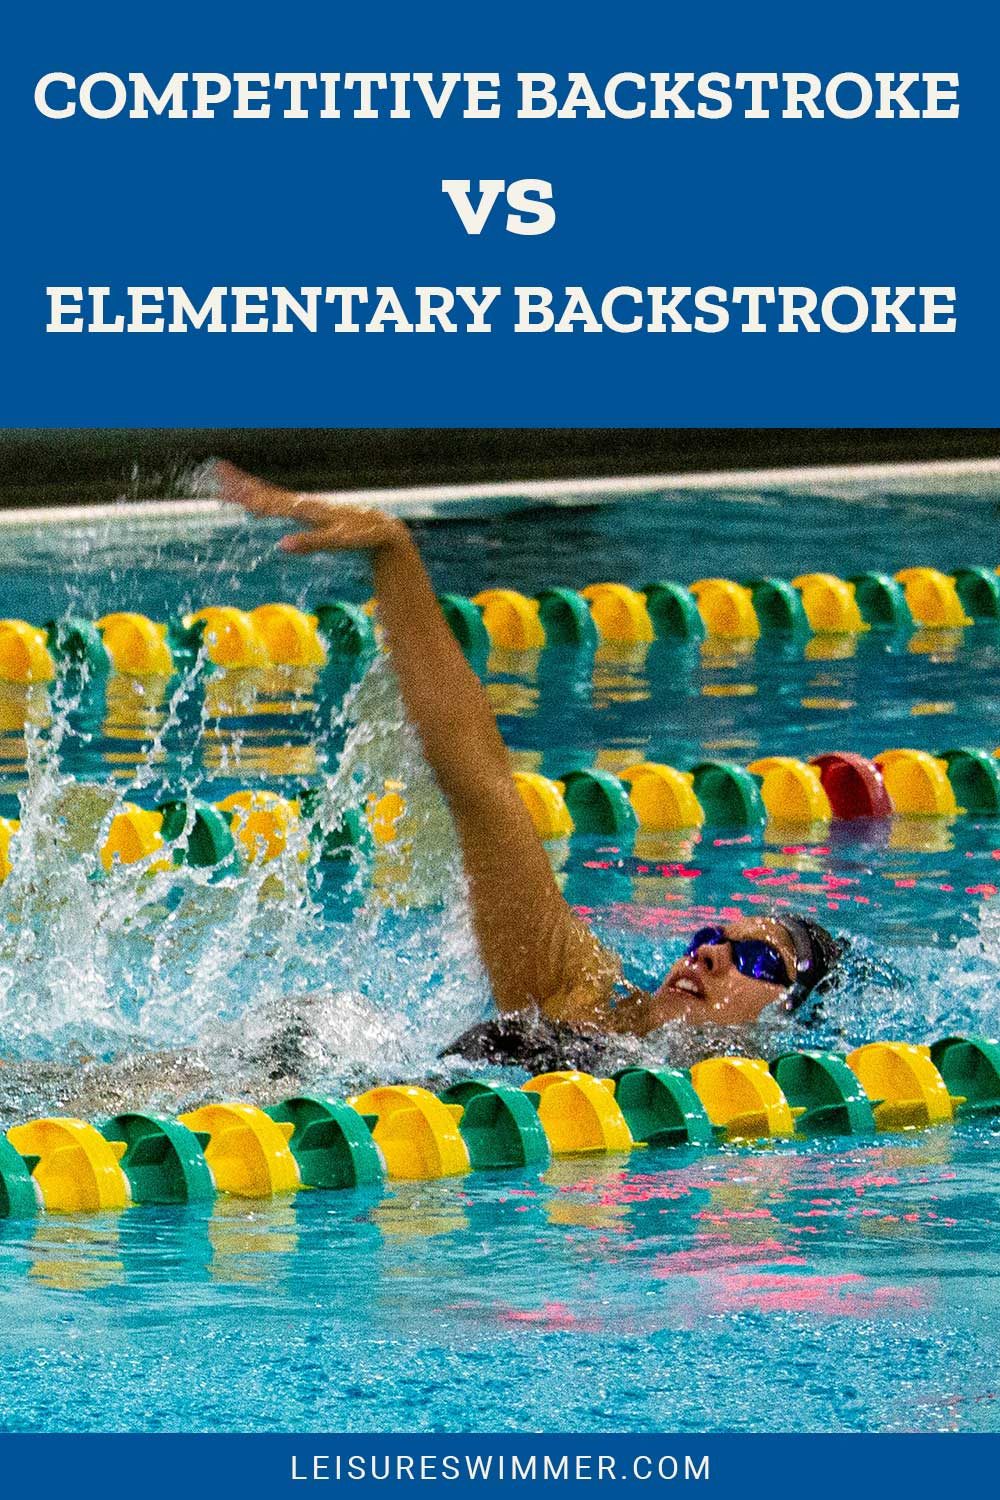 Woman doing backstrokes in a pool - Competitive Backstroke vs. Elementary Backstroke.